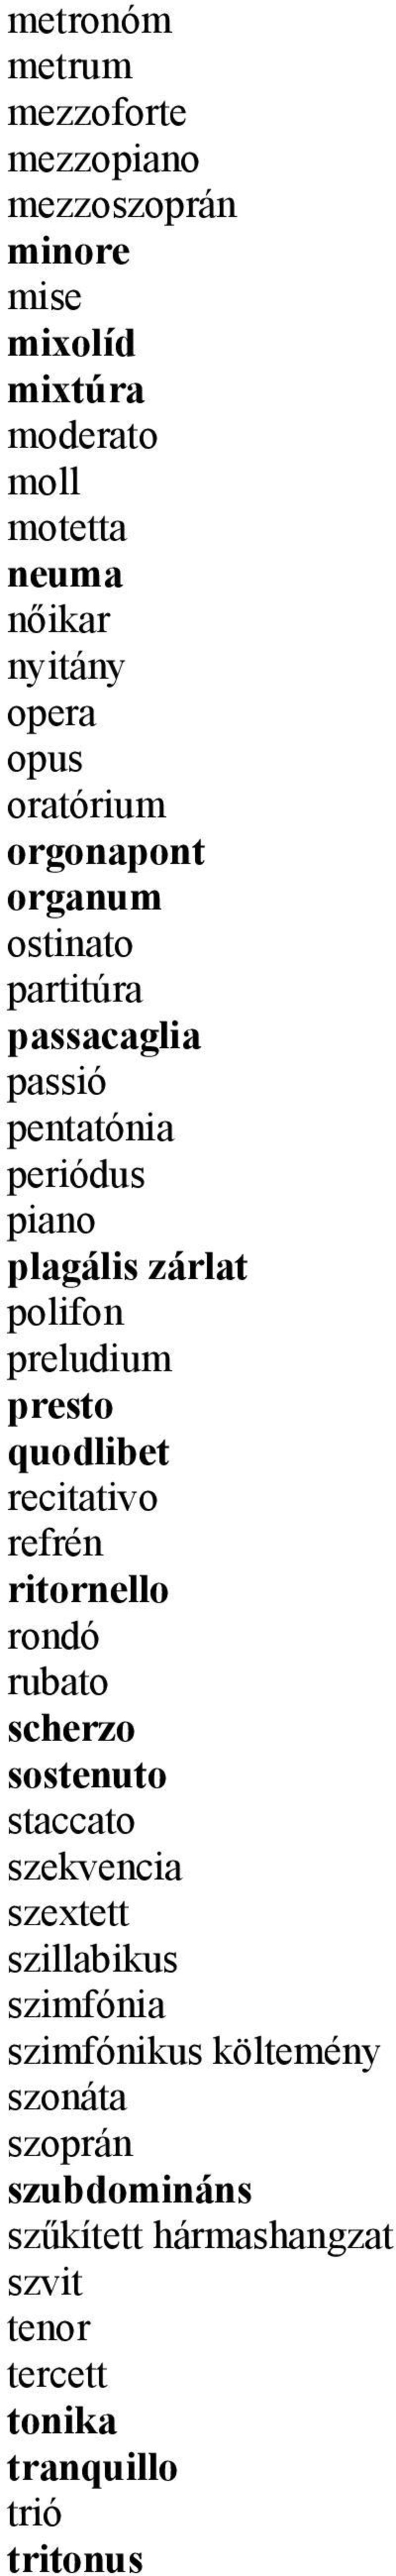 preludium presto quodlibet recitativo refrén ritornello rondó rubato scherzo sostenuto staccato szekvencia szextett szillabikus